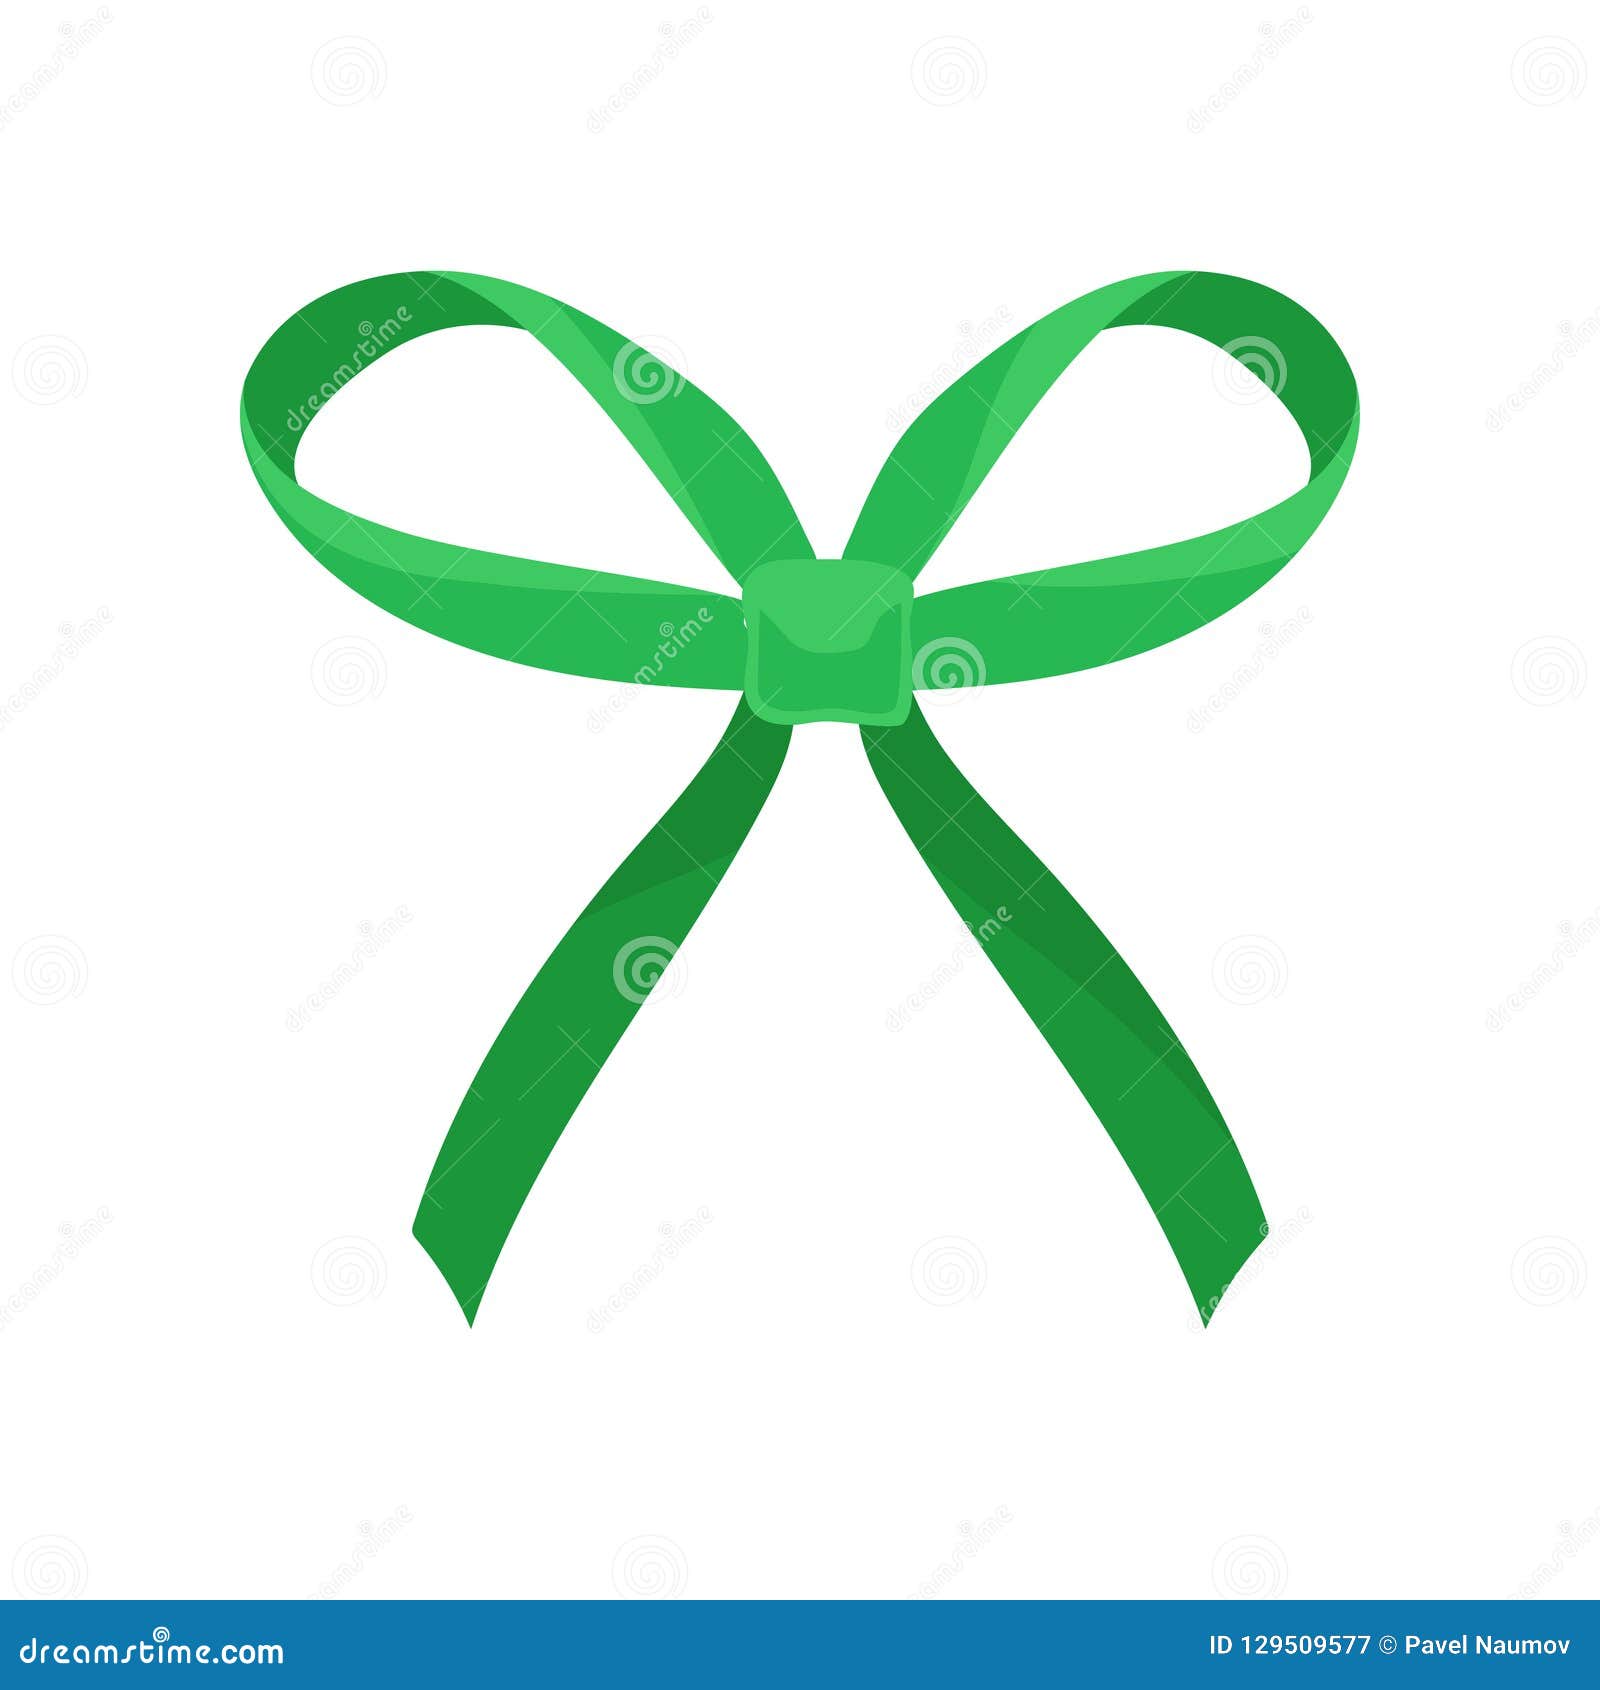 Vector Gift Ribbon Green Silk Bow Stock Vector (Royalty Free